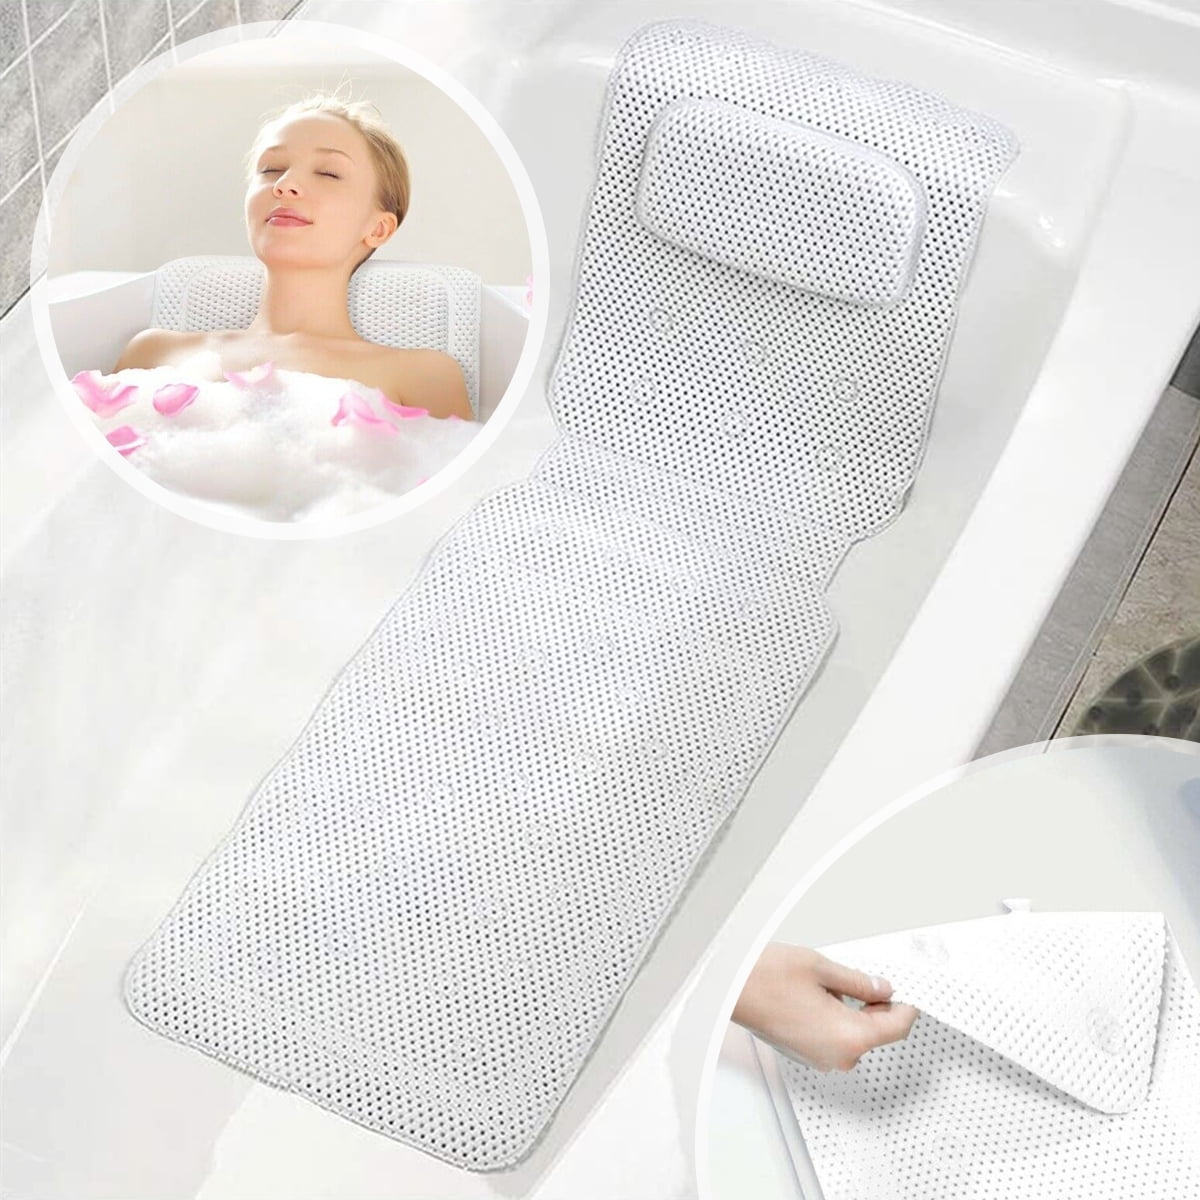 Mlfire Full Body Bath Cushion Bath Pillow for Head and Neck Rest Bathtub Pillows with 30 Non-Slip Suction Full Body Spa Bath Mattress Cushion with